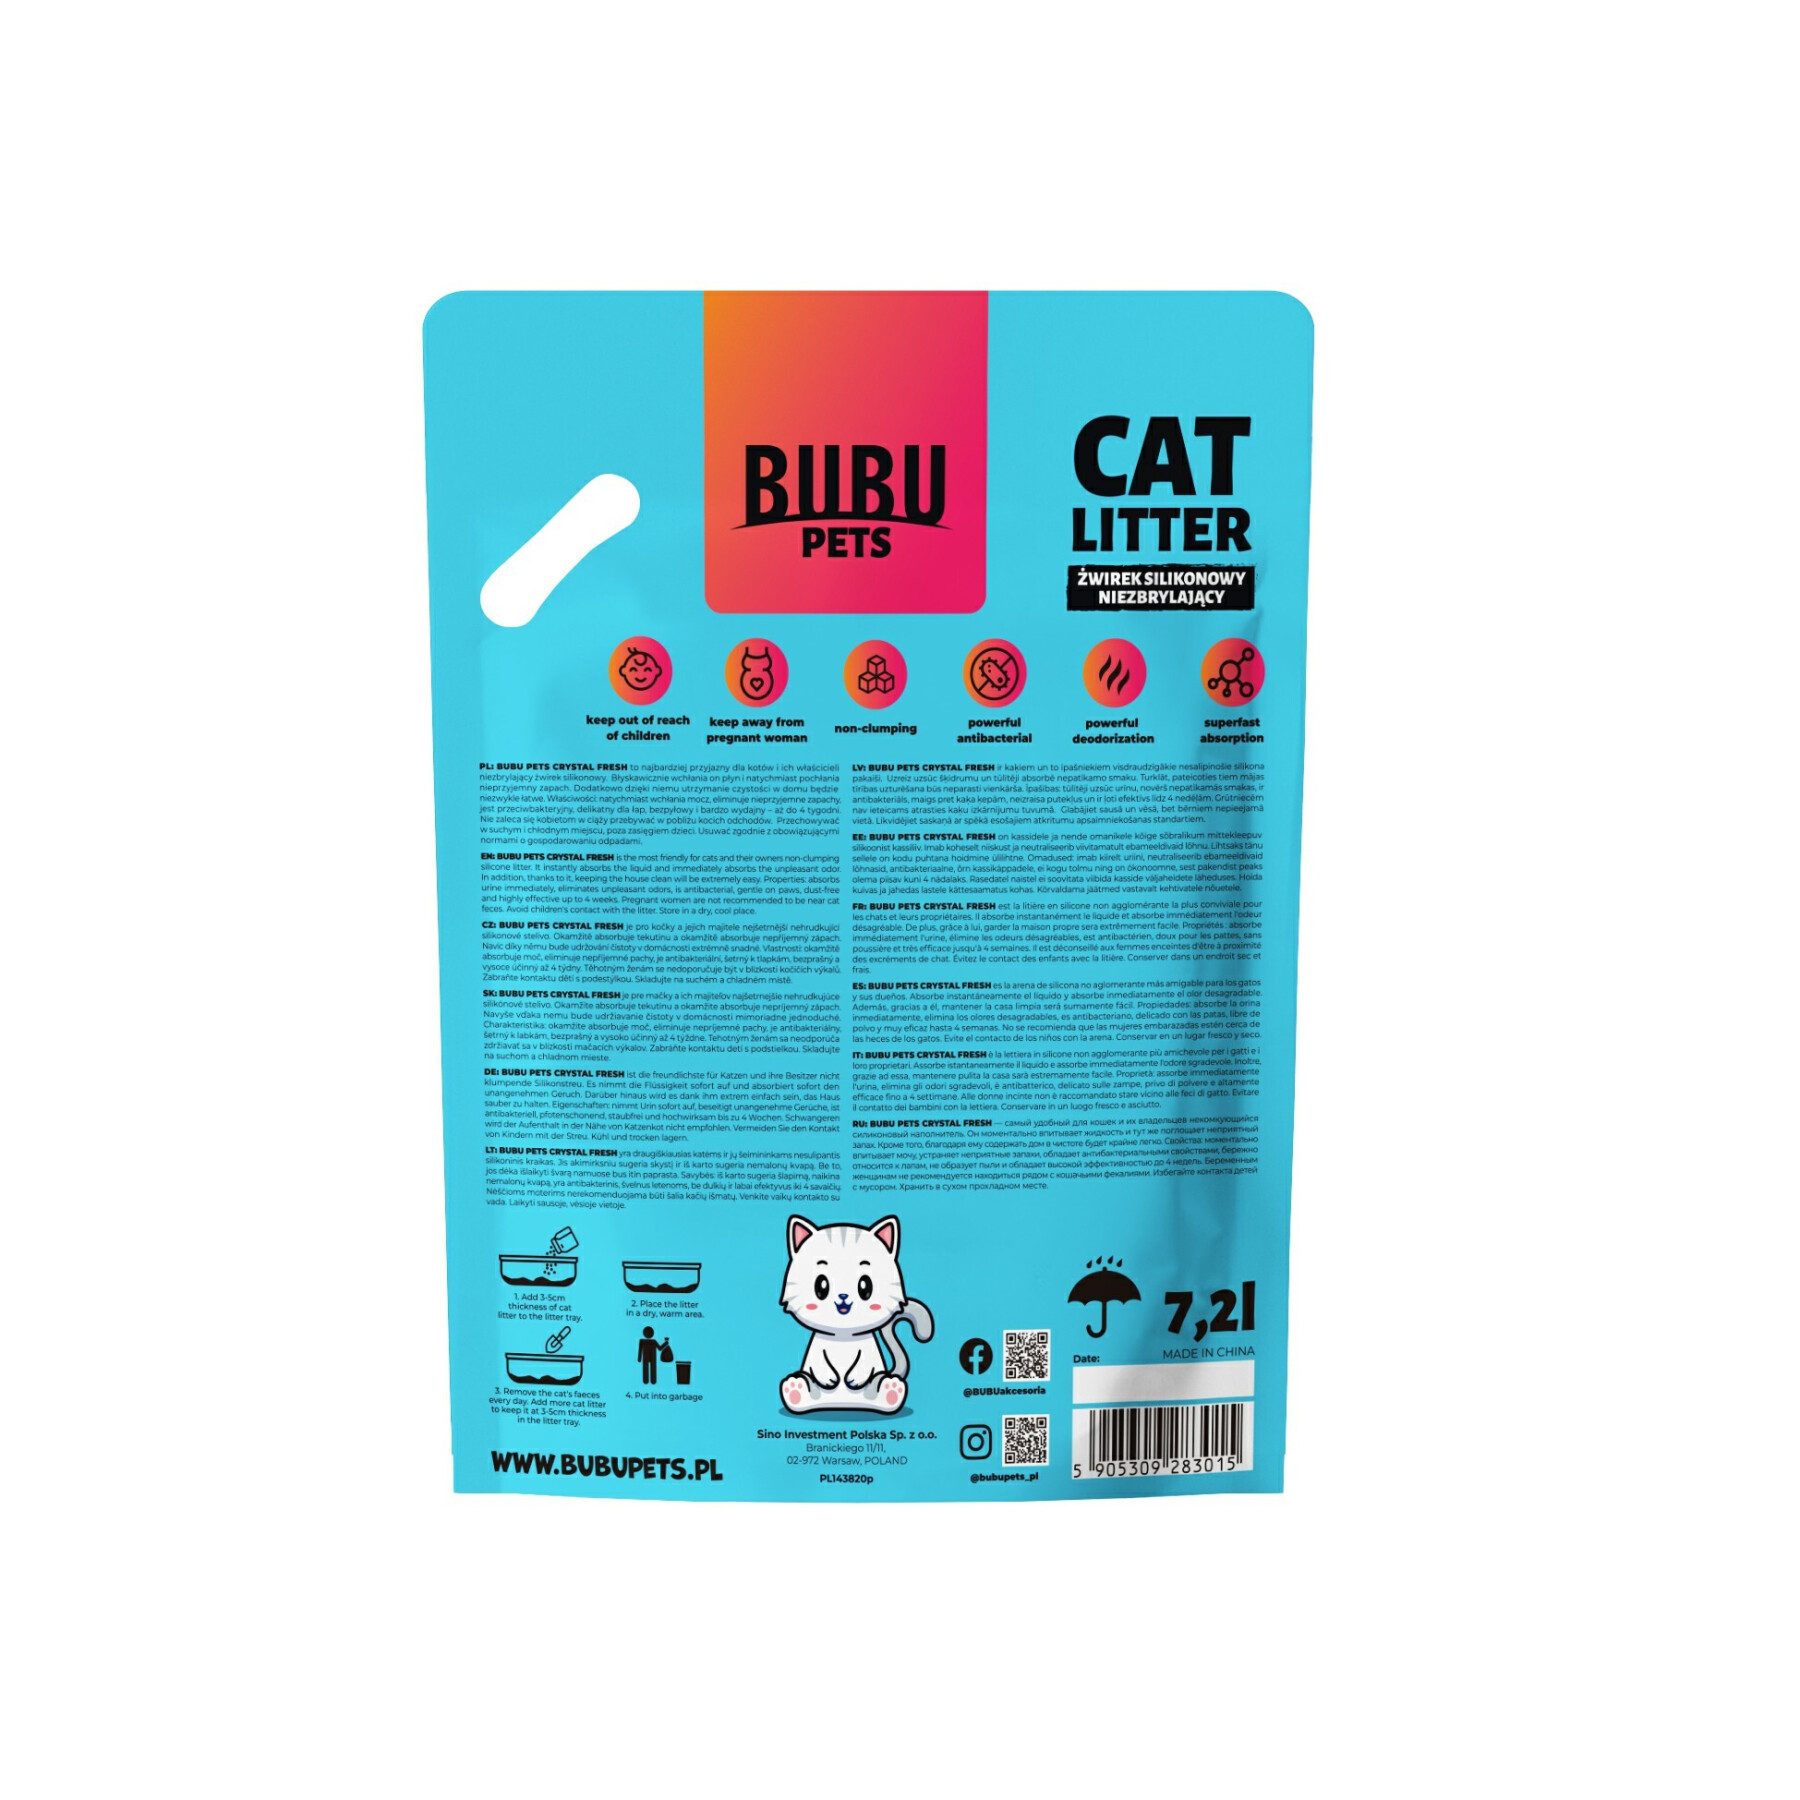 Silica gel cat litter BUBU Pets Original